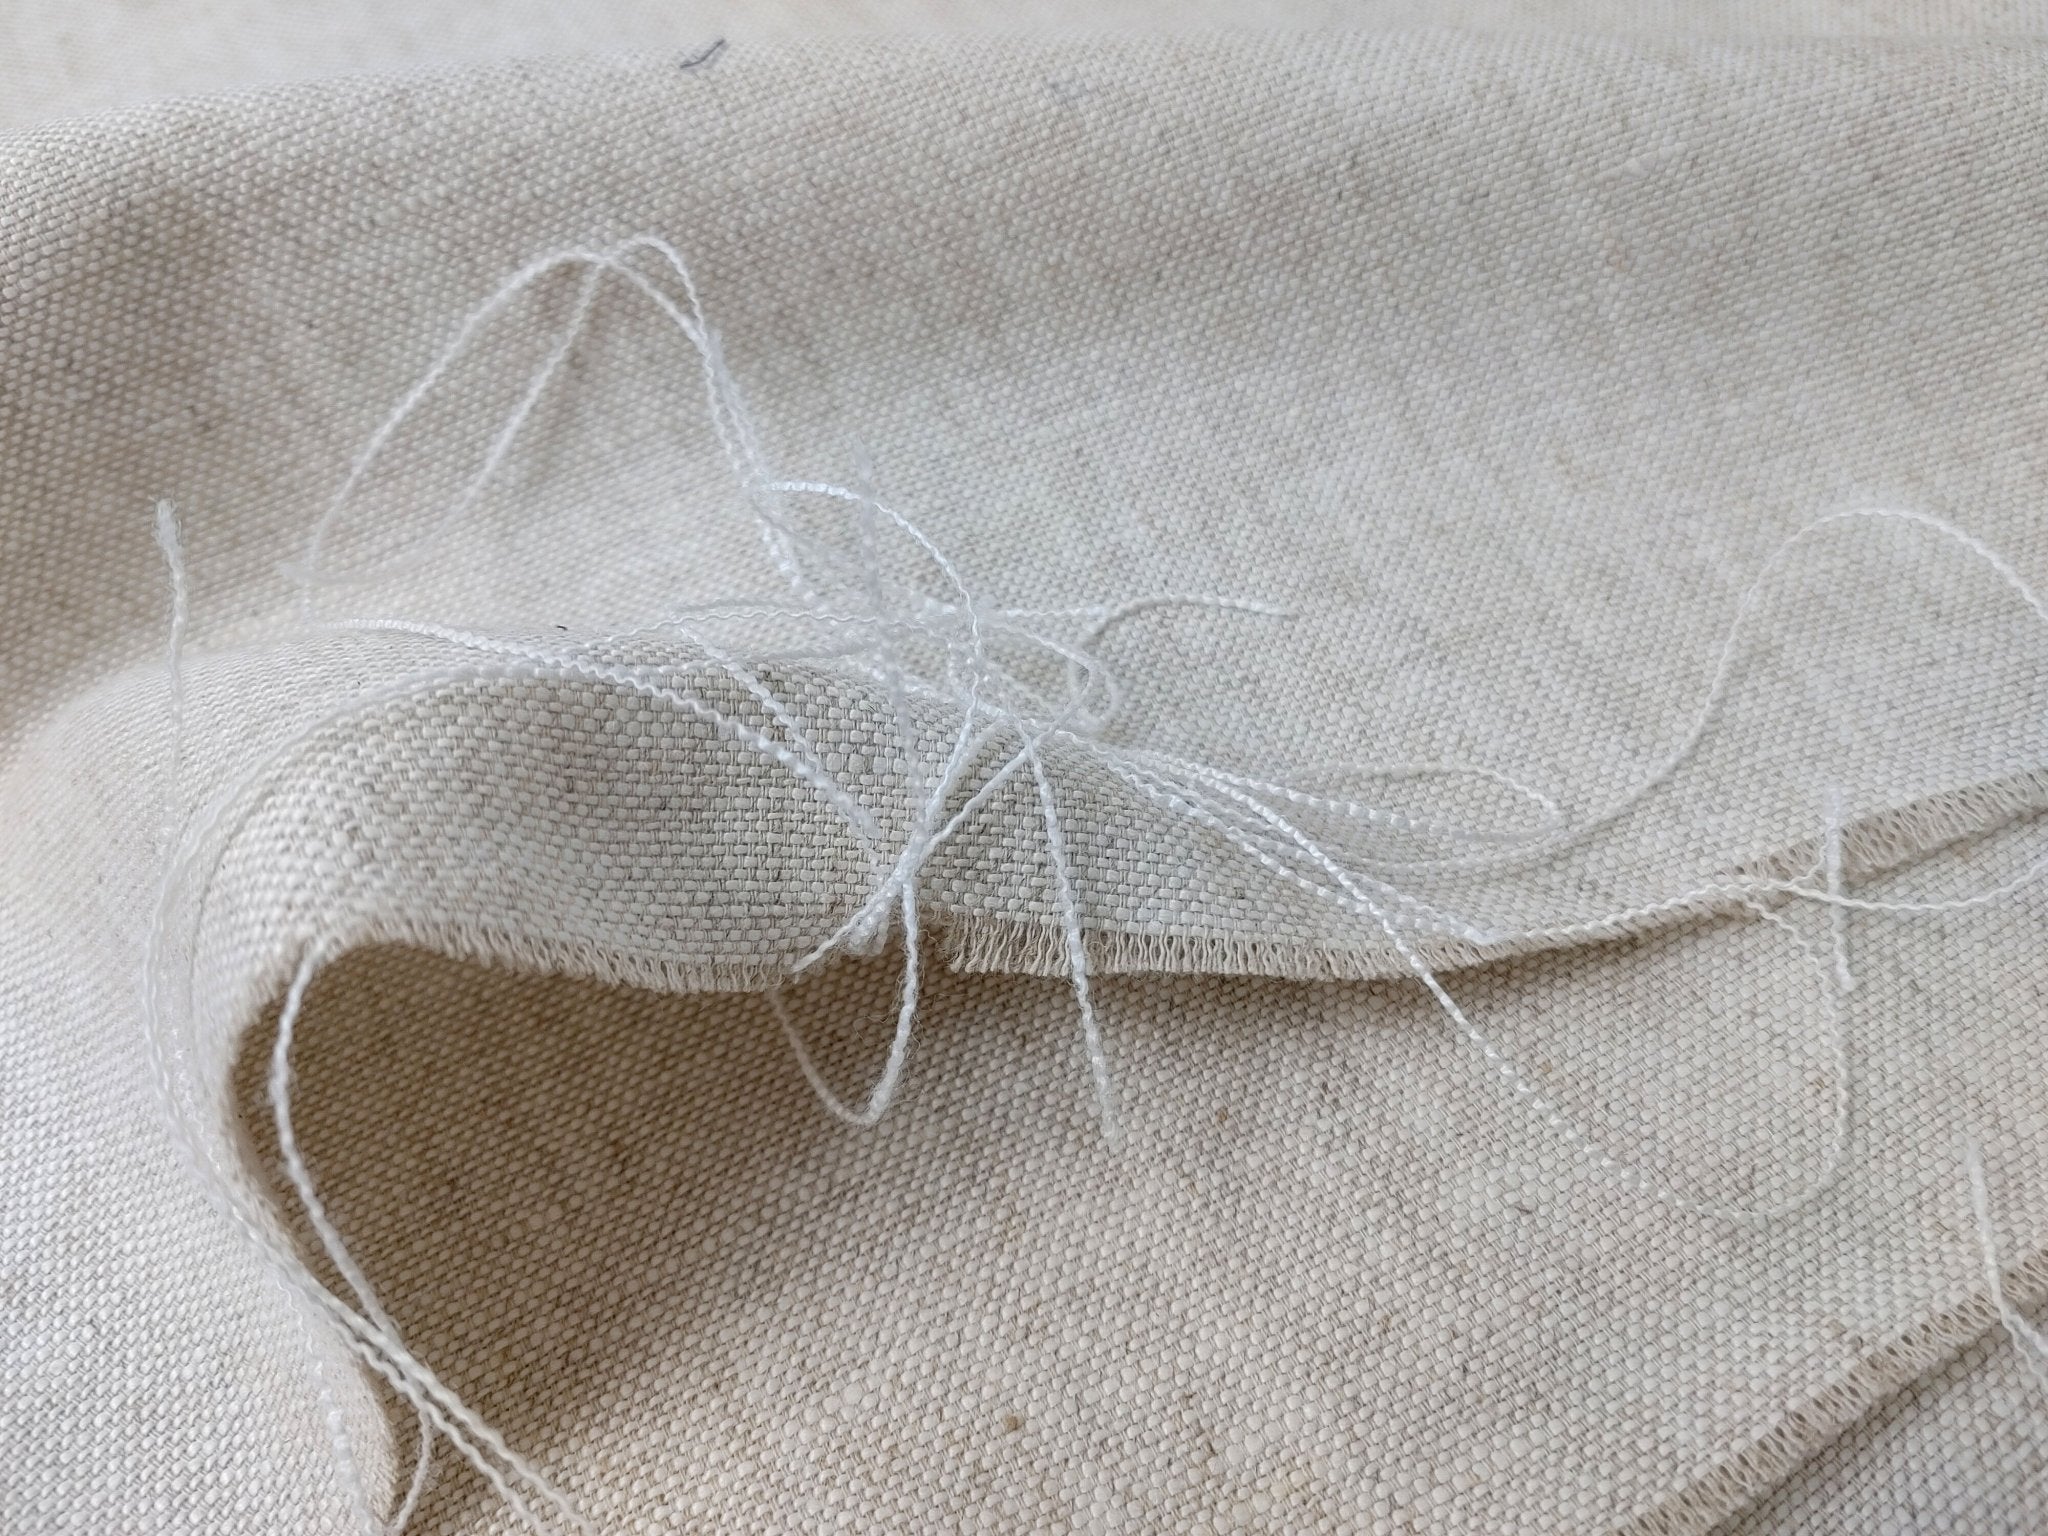 Linen Cotton Natural Color Fabric Basketweave 7658 - The Linen Lab - Natural(light)